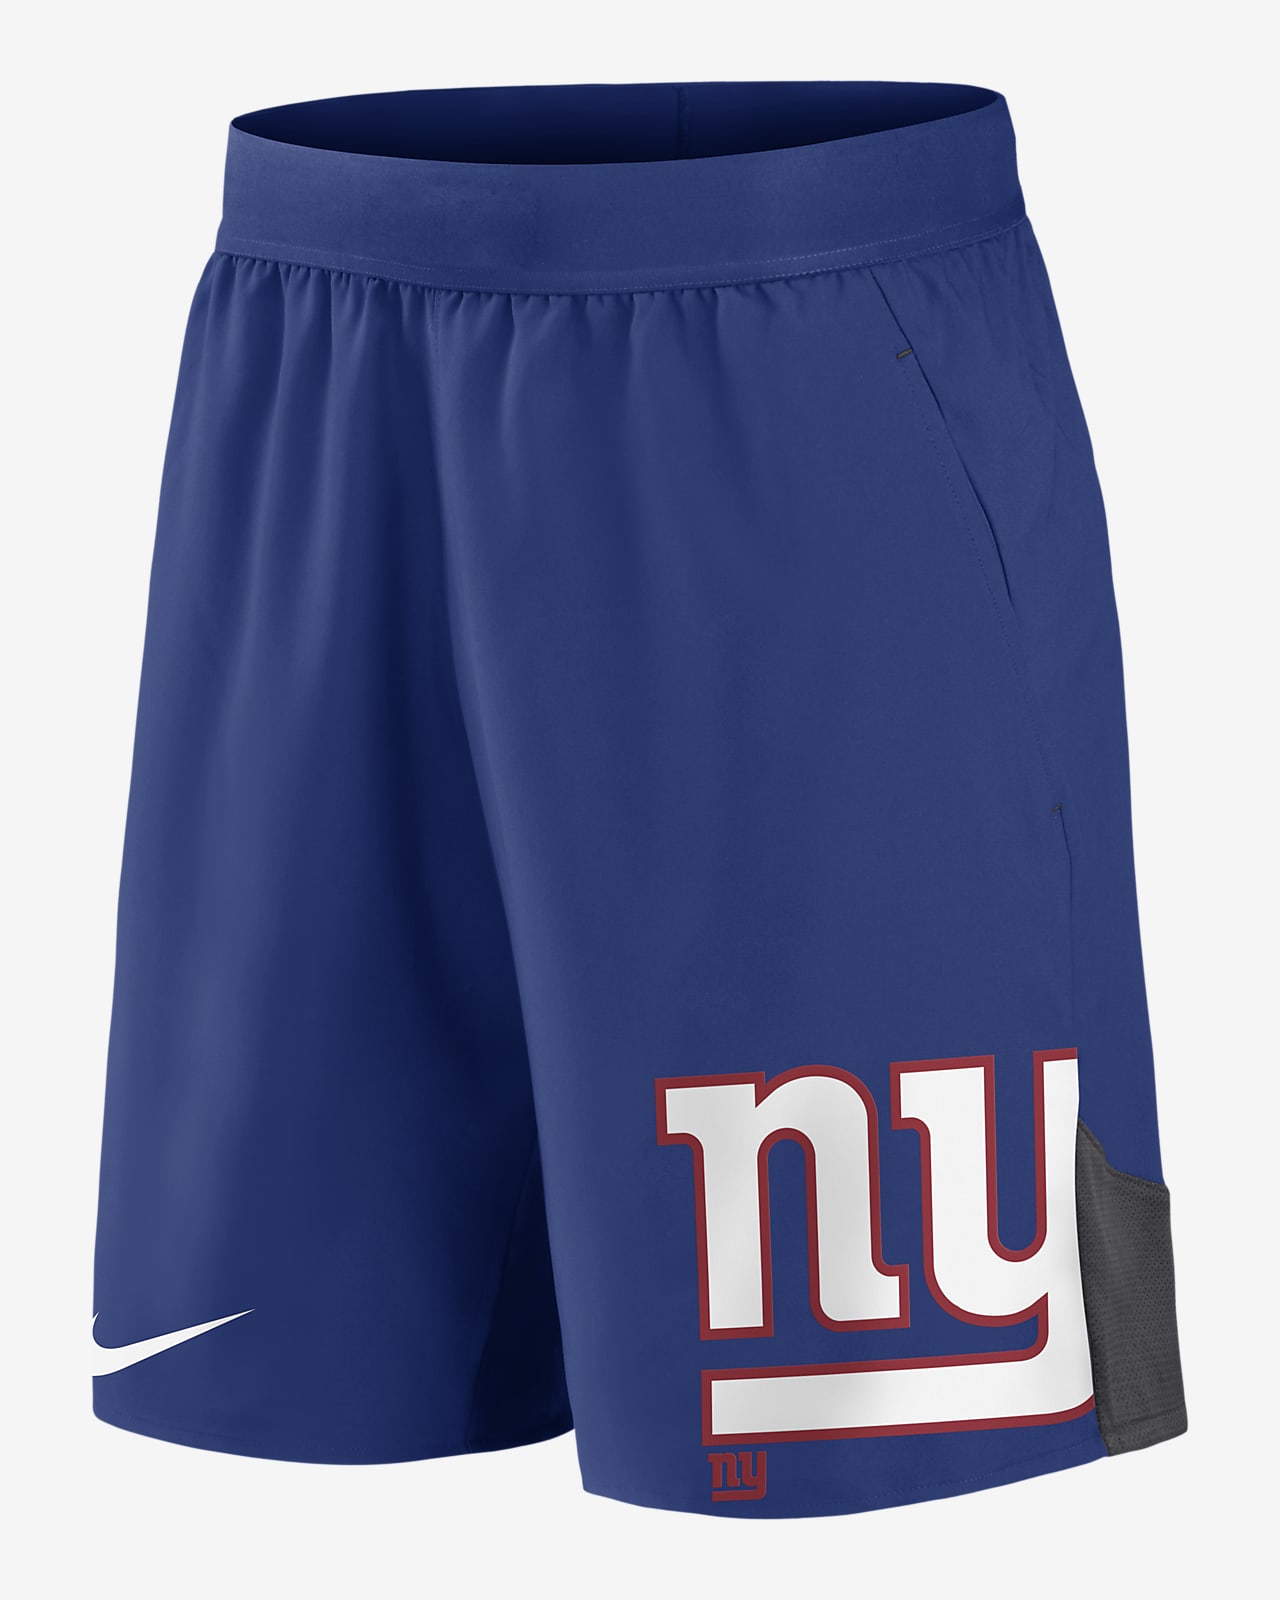 Nike Dri-FIT Stretch (NFL New York Giants) Men's Shorts